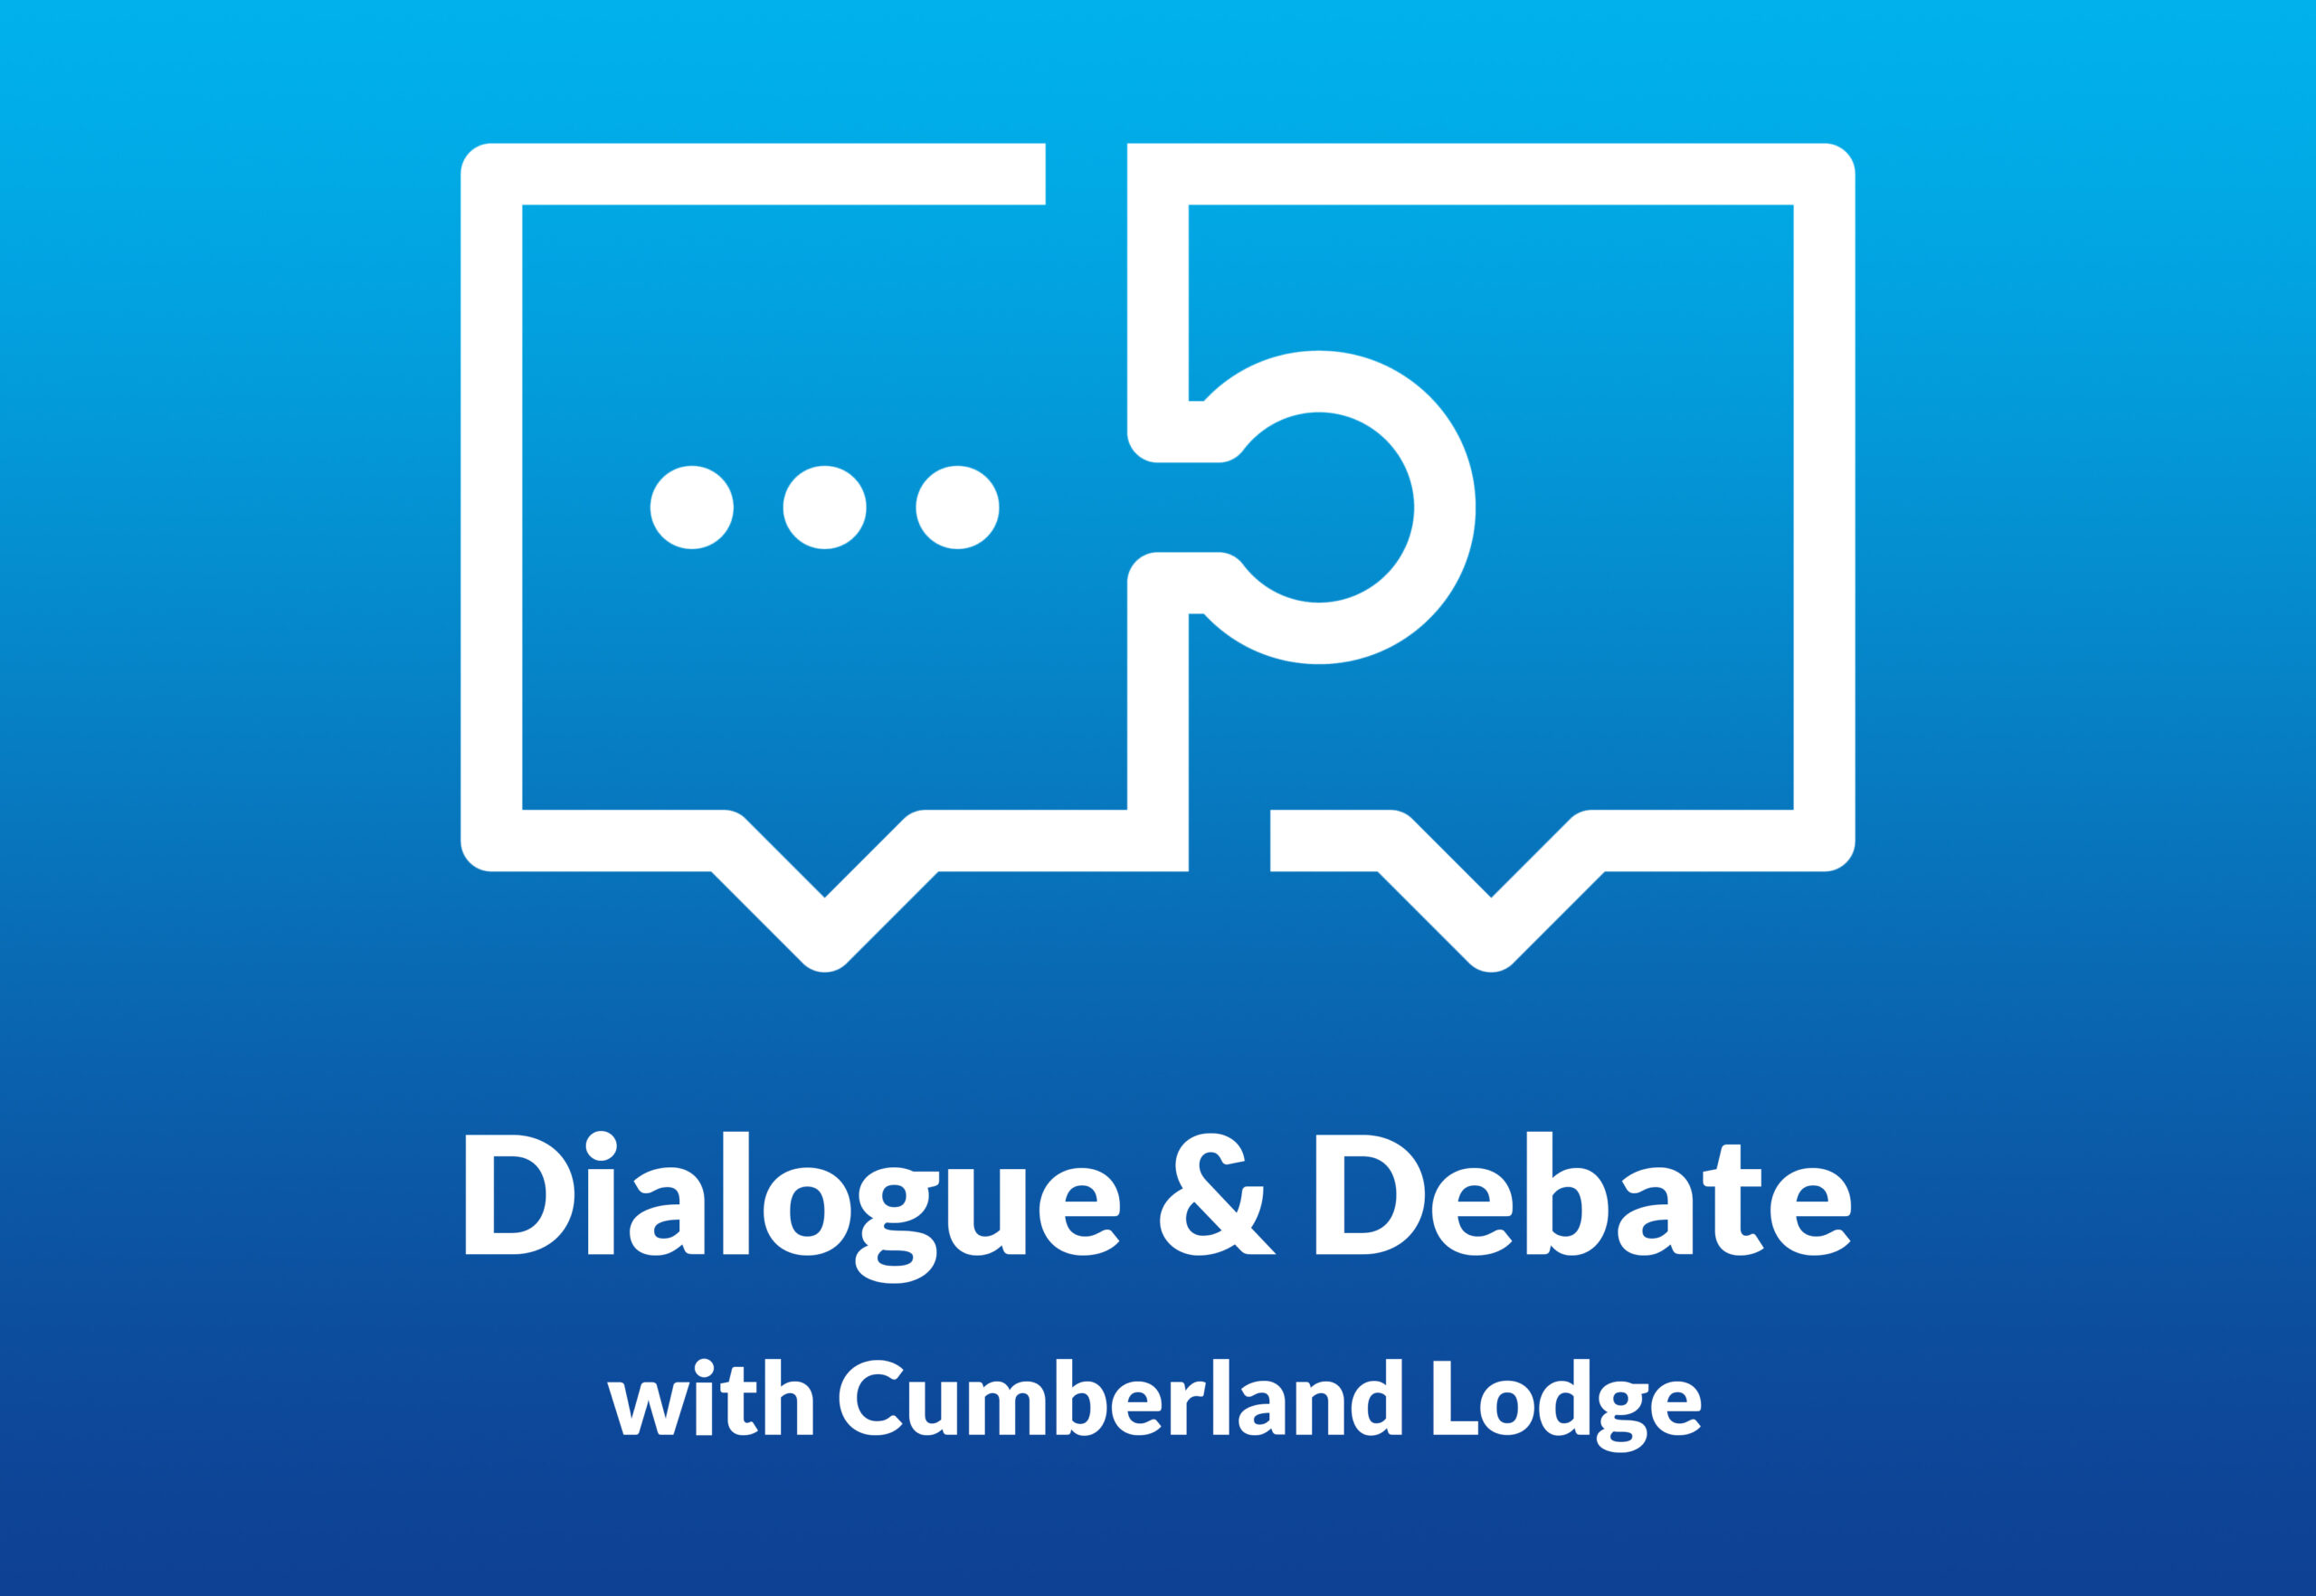 Dialogue & Debate with Cumberland Lodge